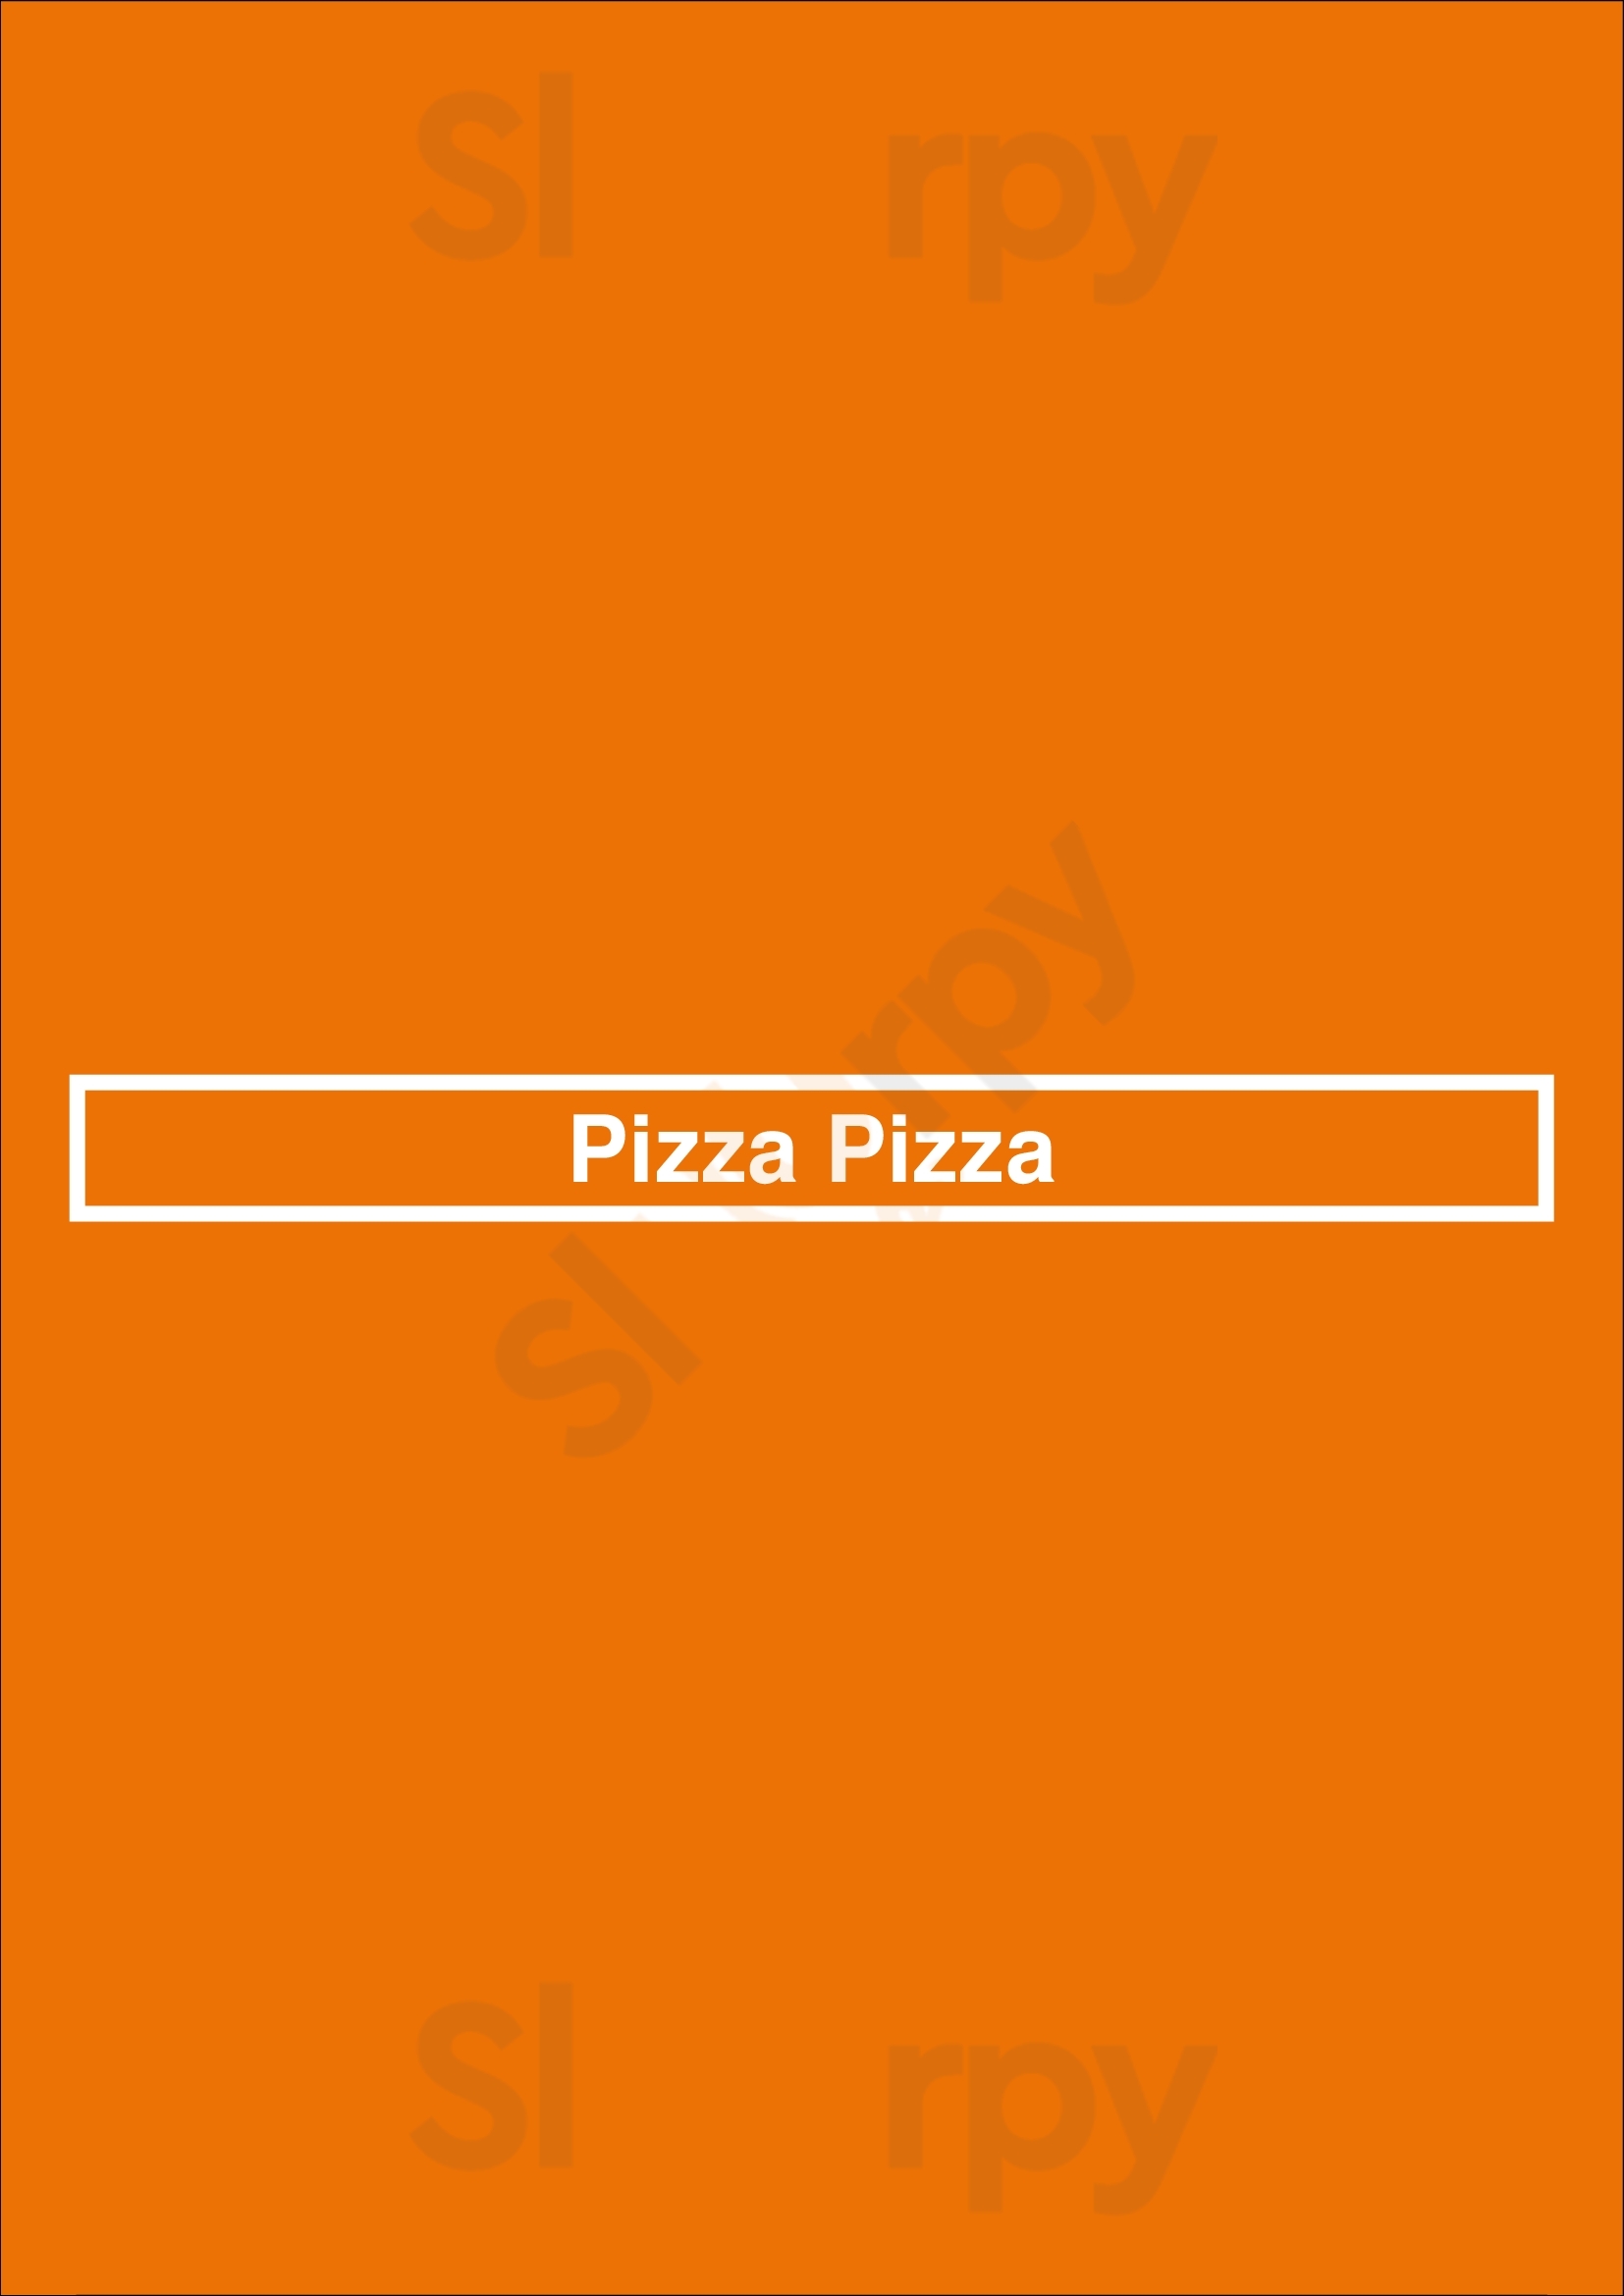 Pizza Pizza Burlington Menu - 1